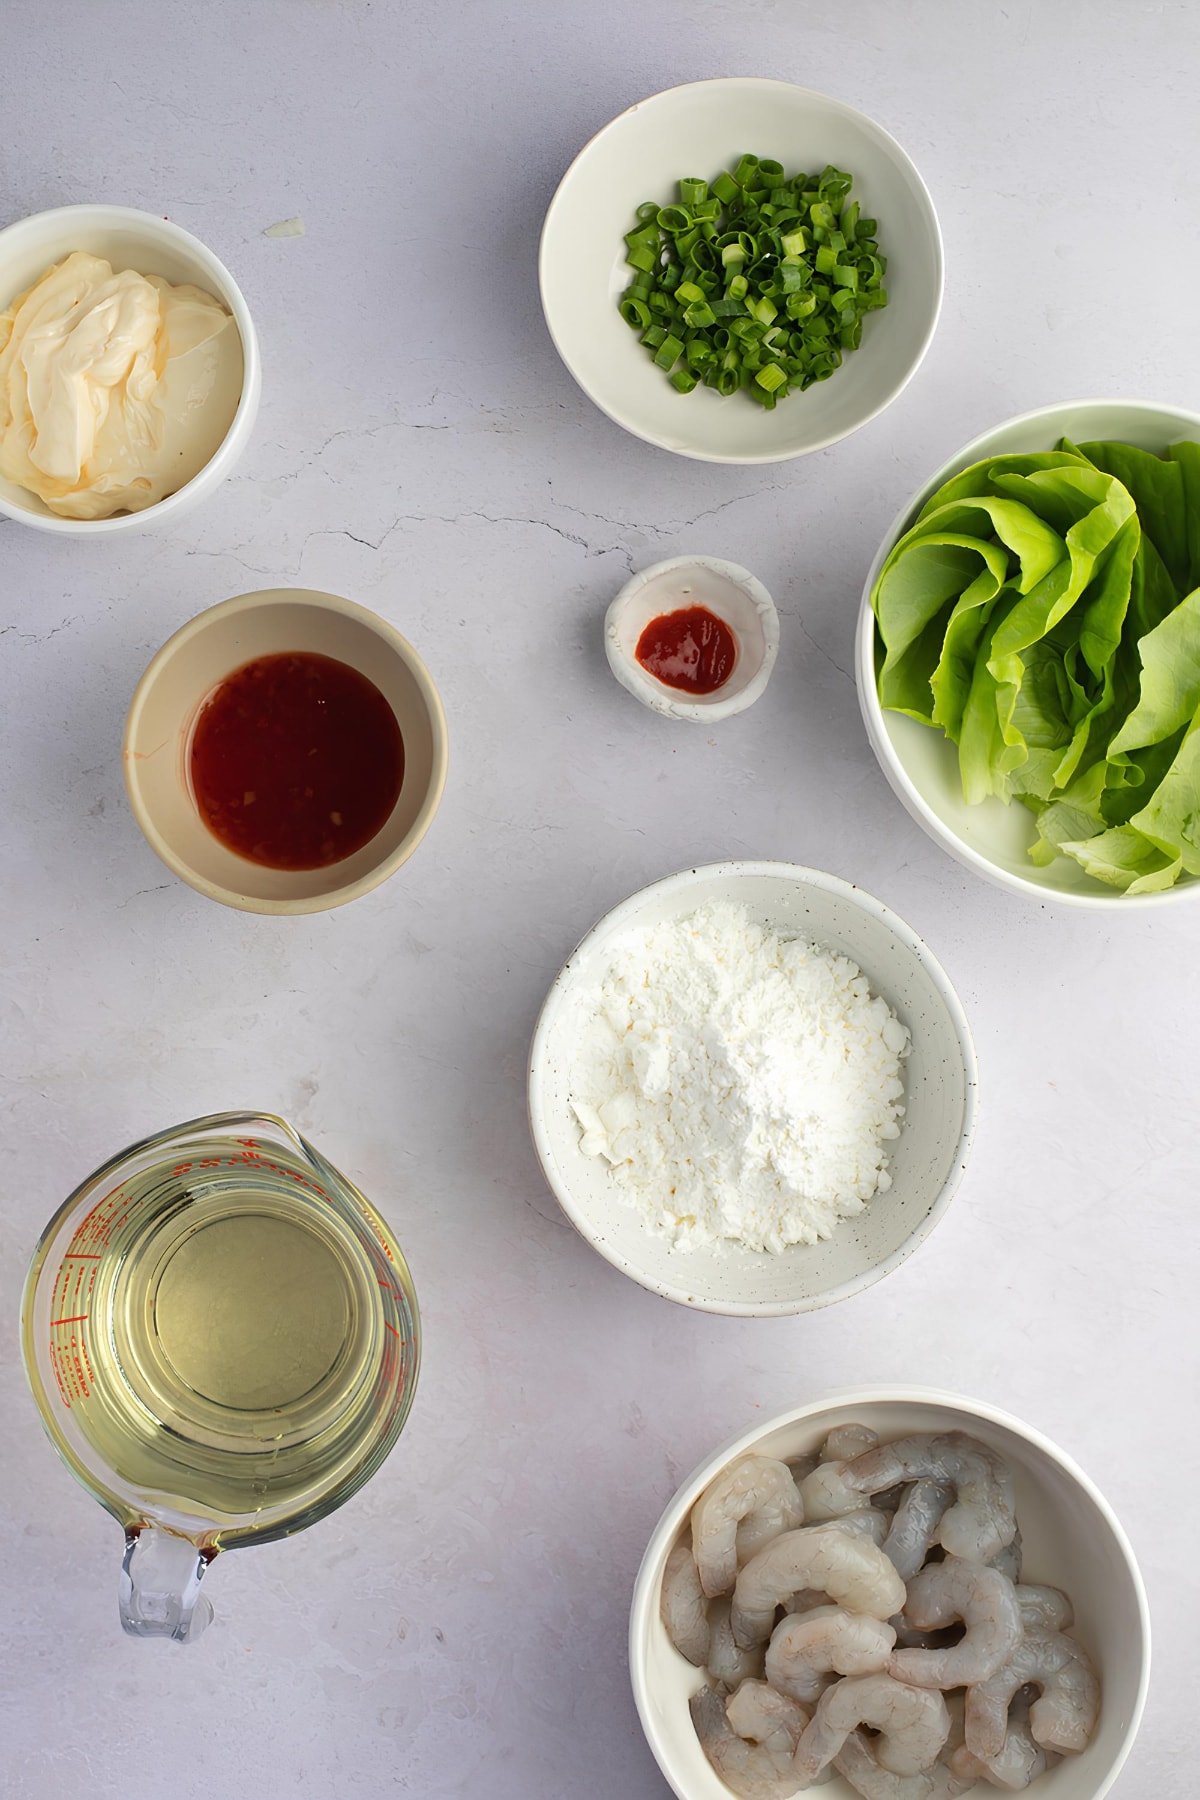 Bang Bang Shrimp Ingredients - Sweet Chili, Sriracha, Cornstarch, Shrimp, Oil, Lettuce Leaves and Green Onions